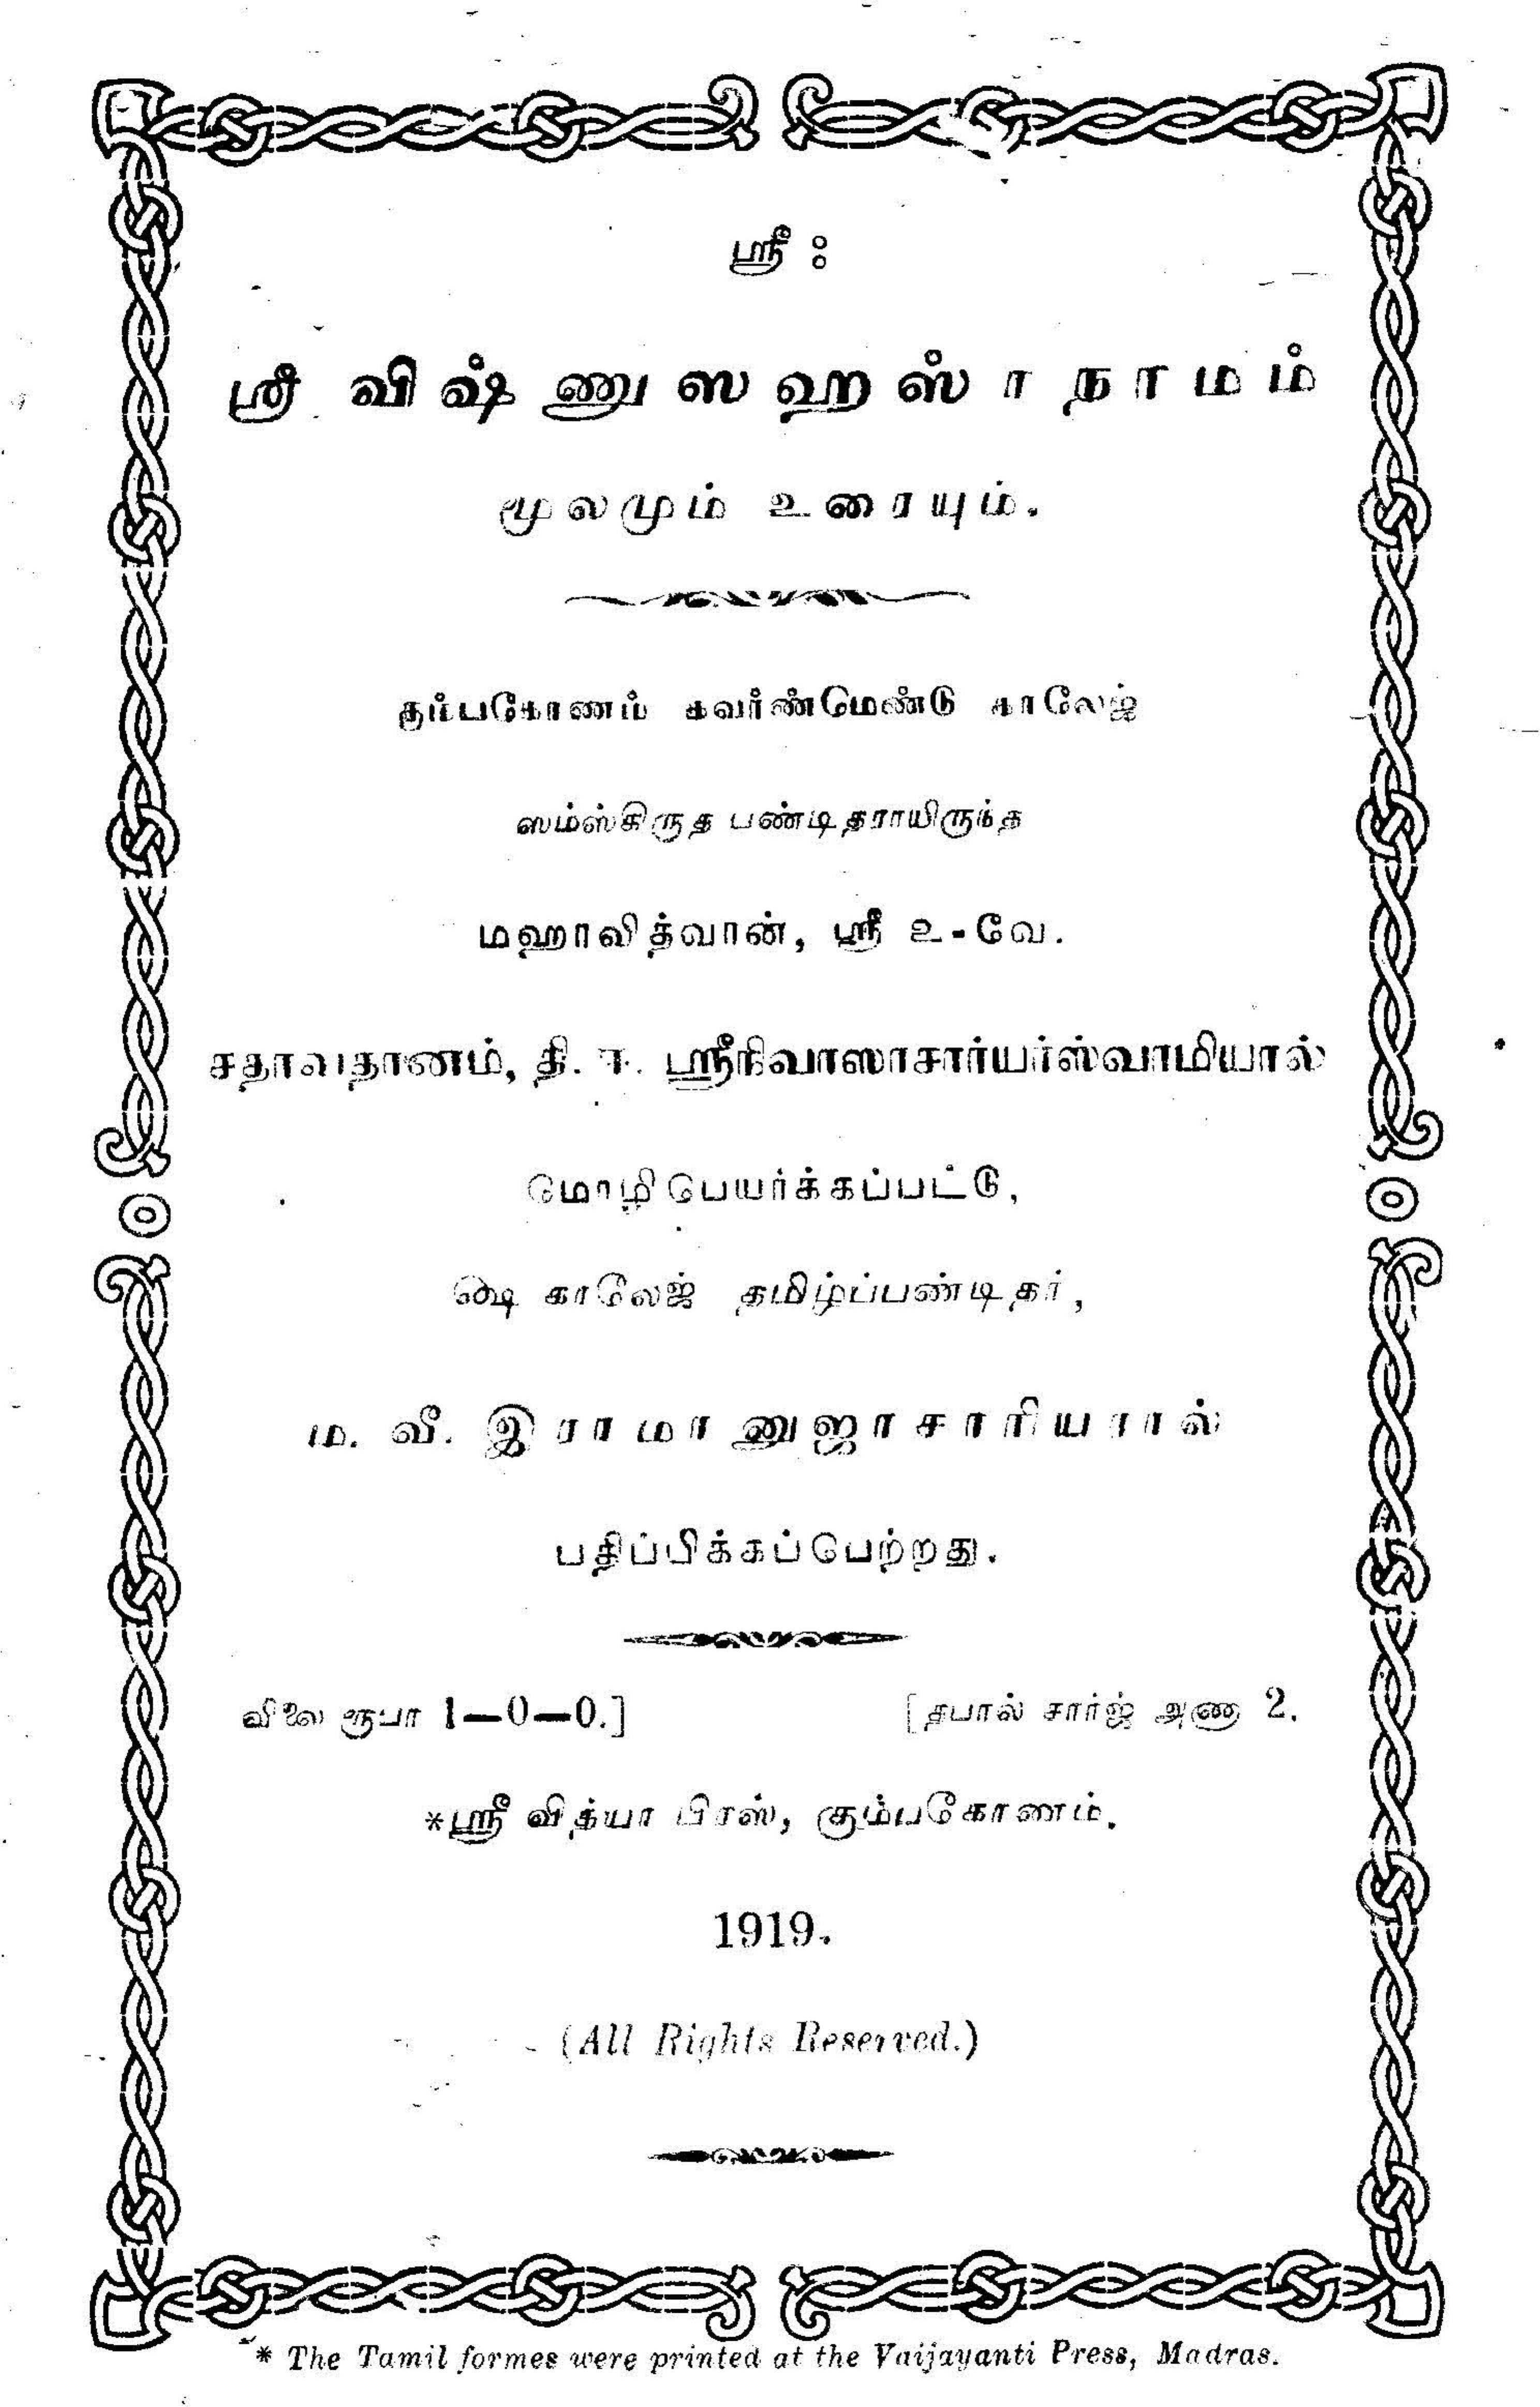 vishnu sahasranamam lyrics in tamil with meaning